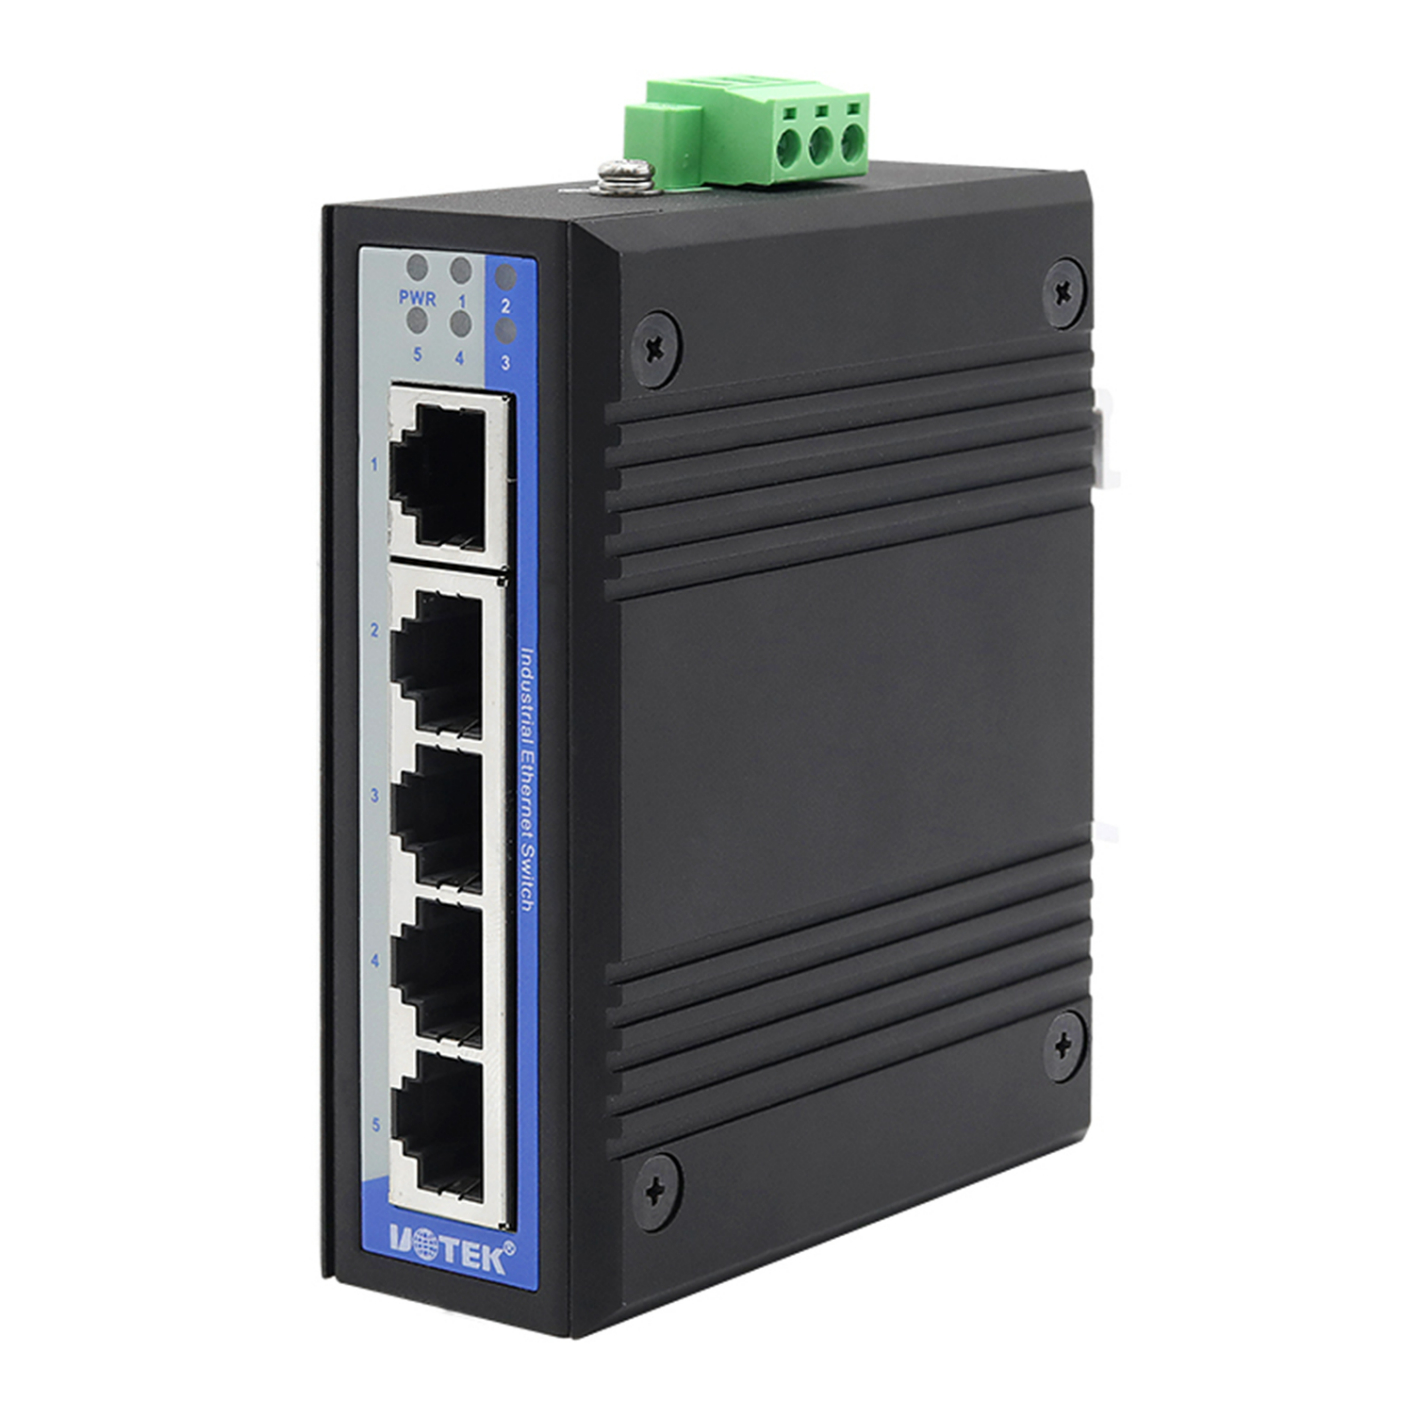 UOTEK 1000M Ethernet Switch Industrial Gigabit Ethernet Switch 5 Port Unmanaged Network DIN-Rail Mounted Full Half Duplex Plug and Play UT-6405GC